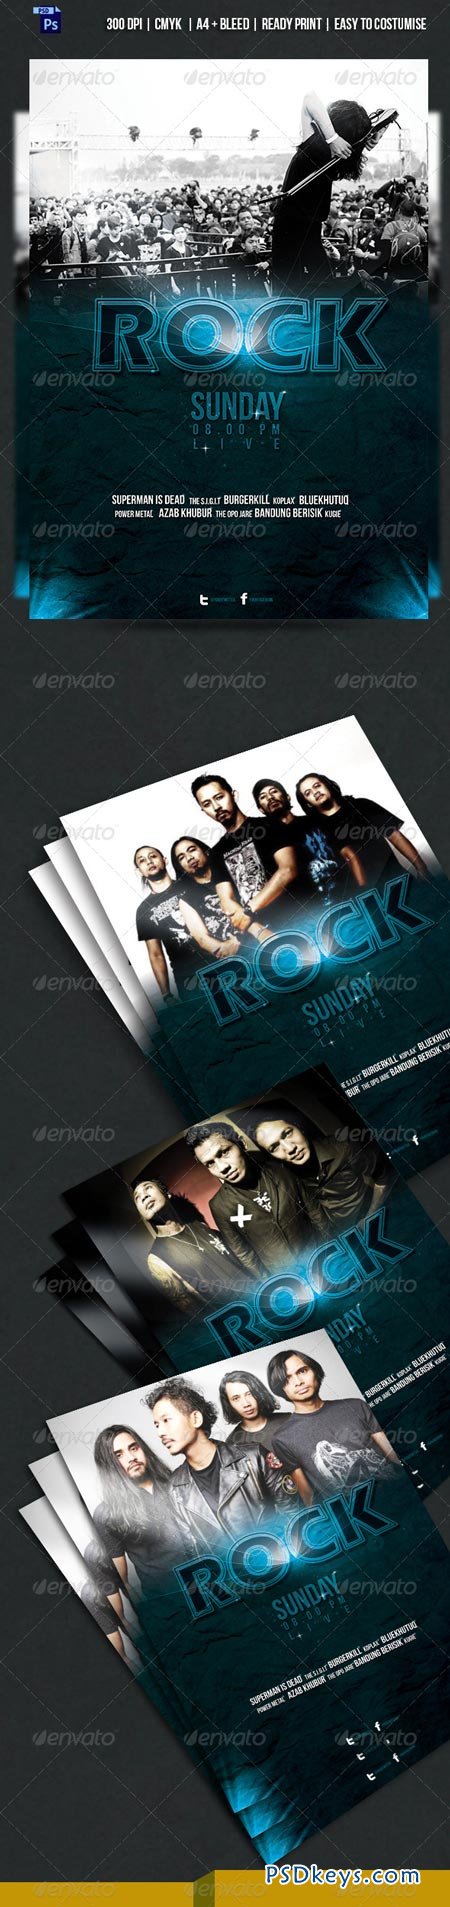 KOPLAX - Rock Band Concert Flyer 6680437